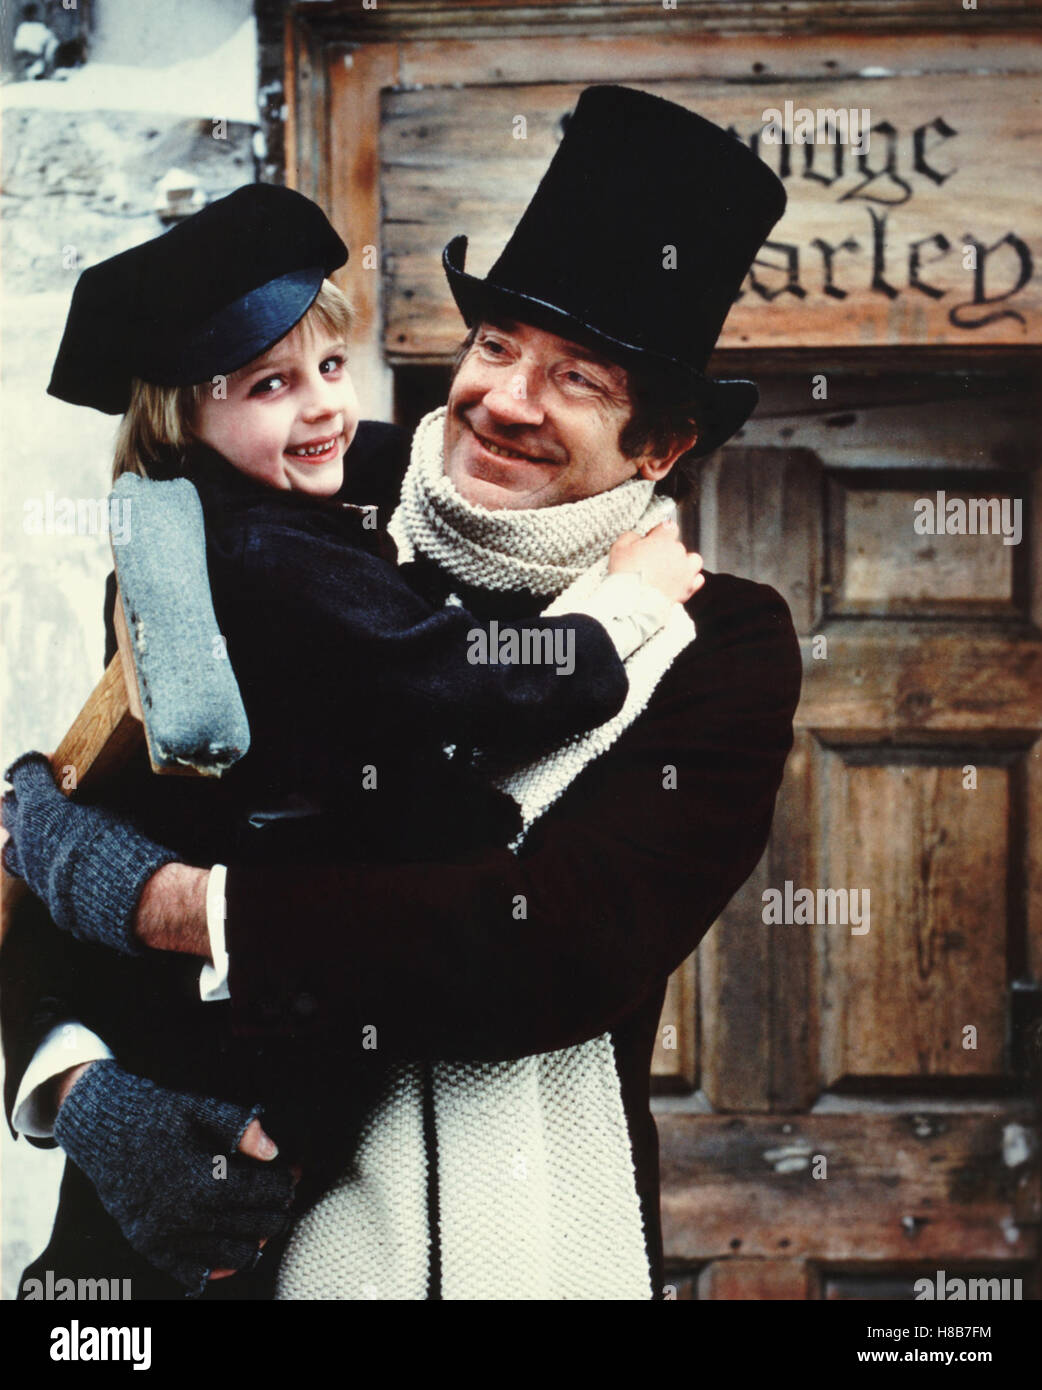 Charles Dickens Weihnachtsgeschichte (A CHRISTMAS CAROL) TVM GB-USA 1984,  Regie: Clive Donner, ANTHONY WALTERS, DAVID WARNER Stockfotografie - Alamy